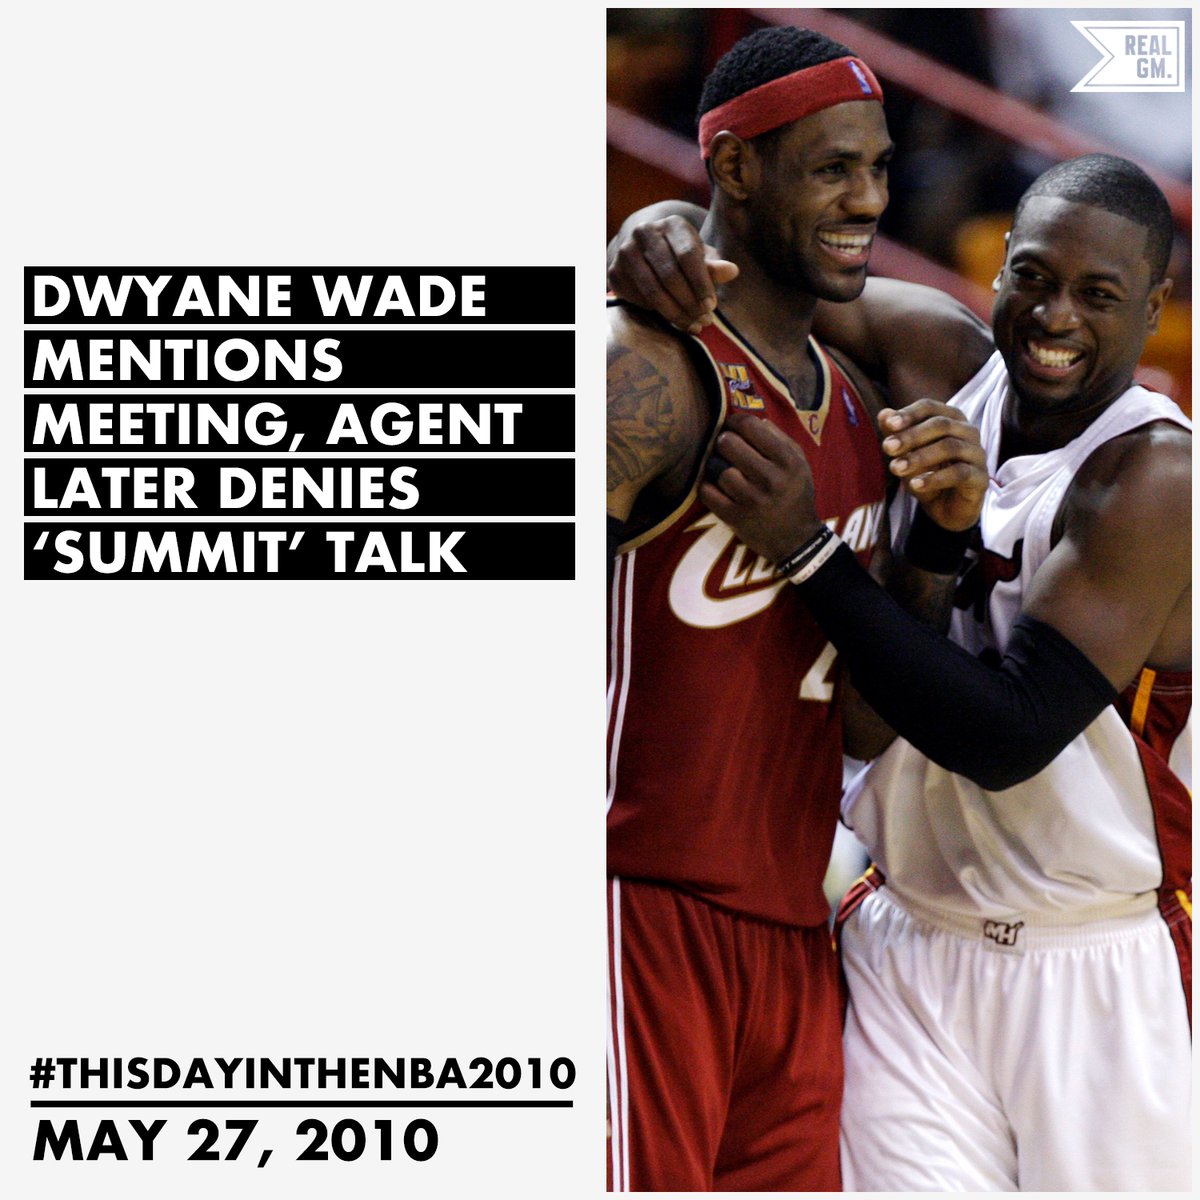  #ThisDayInTheNBA2010May 27, 2010Dwyane Wade Mentions Meeting, Agent Later Denies 'Summit' Talk https://basketball.realgm.com/wiretap/204163/Dwyane-Wade-Mentions-Meeting-Agent-Later-Denies-Summit-Talk